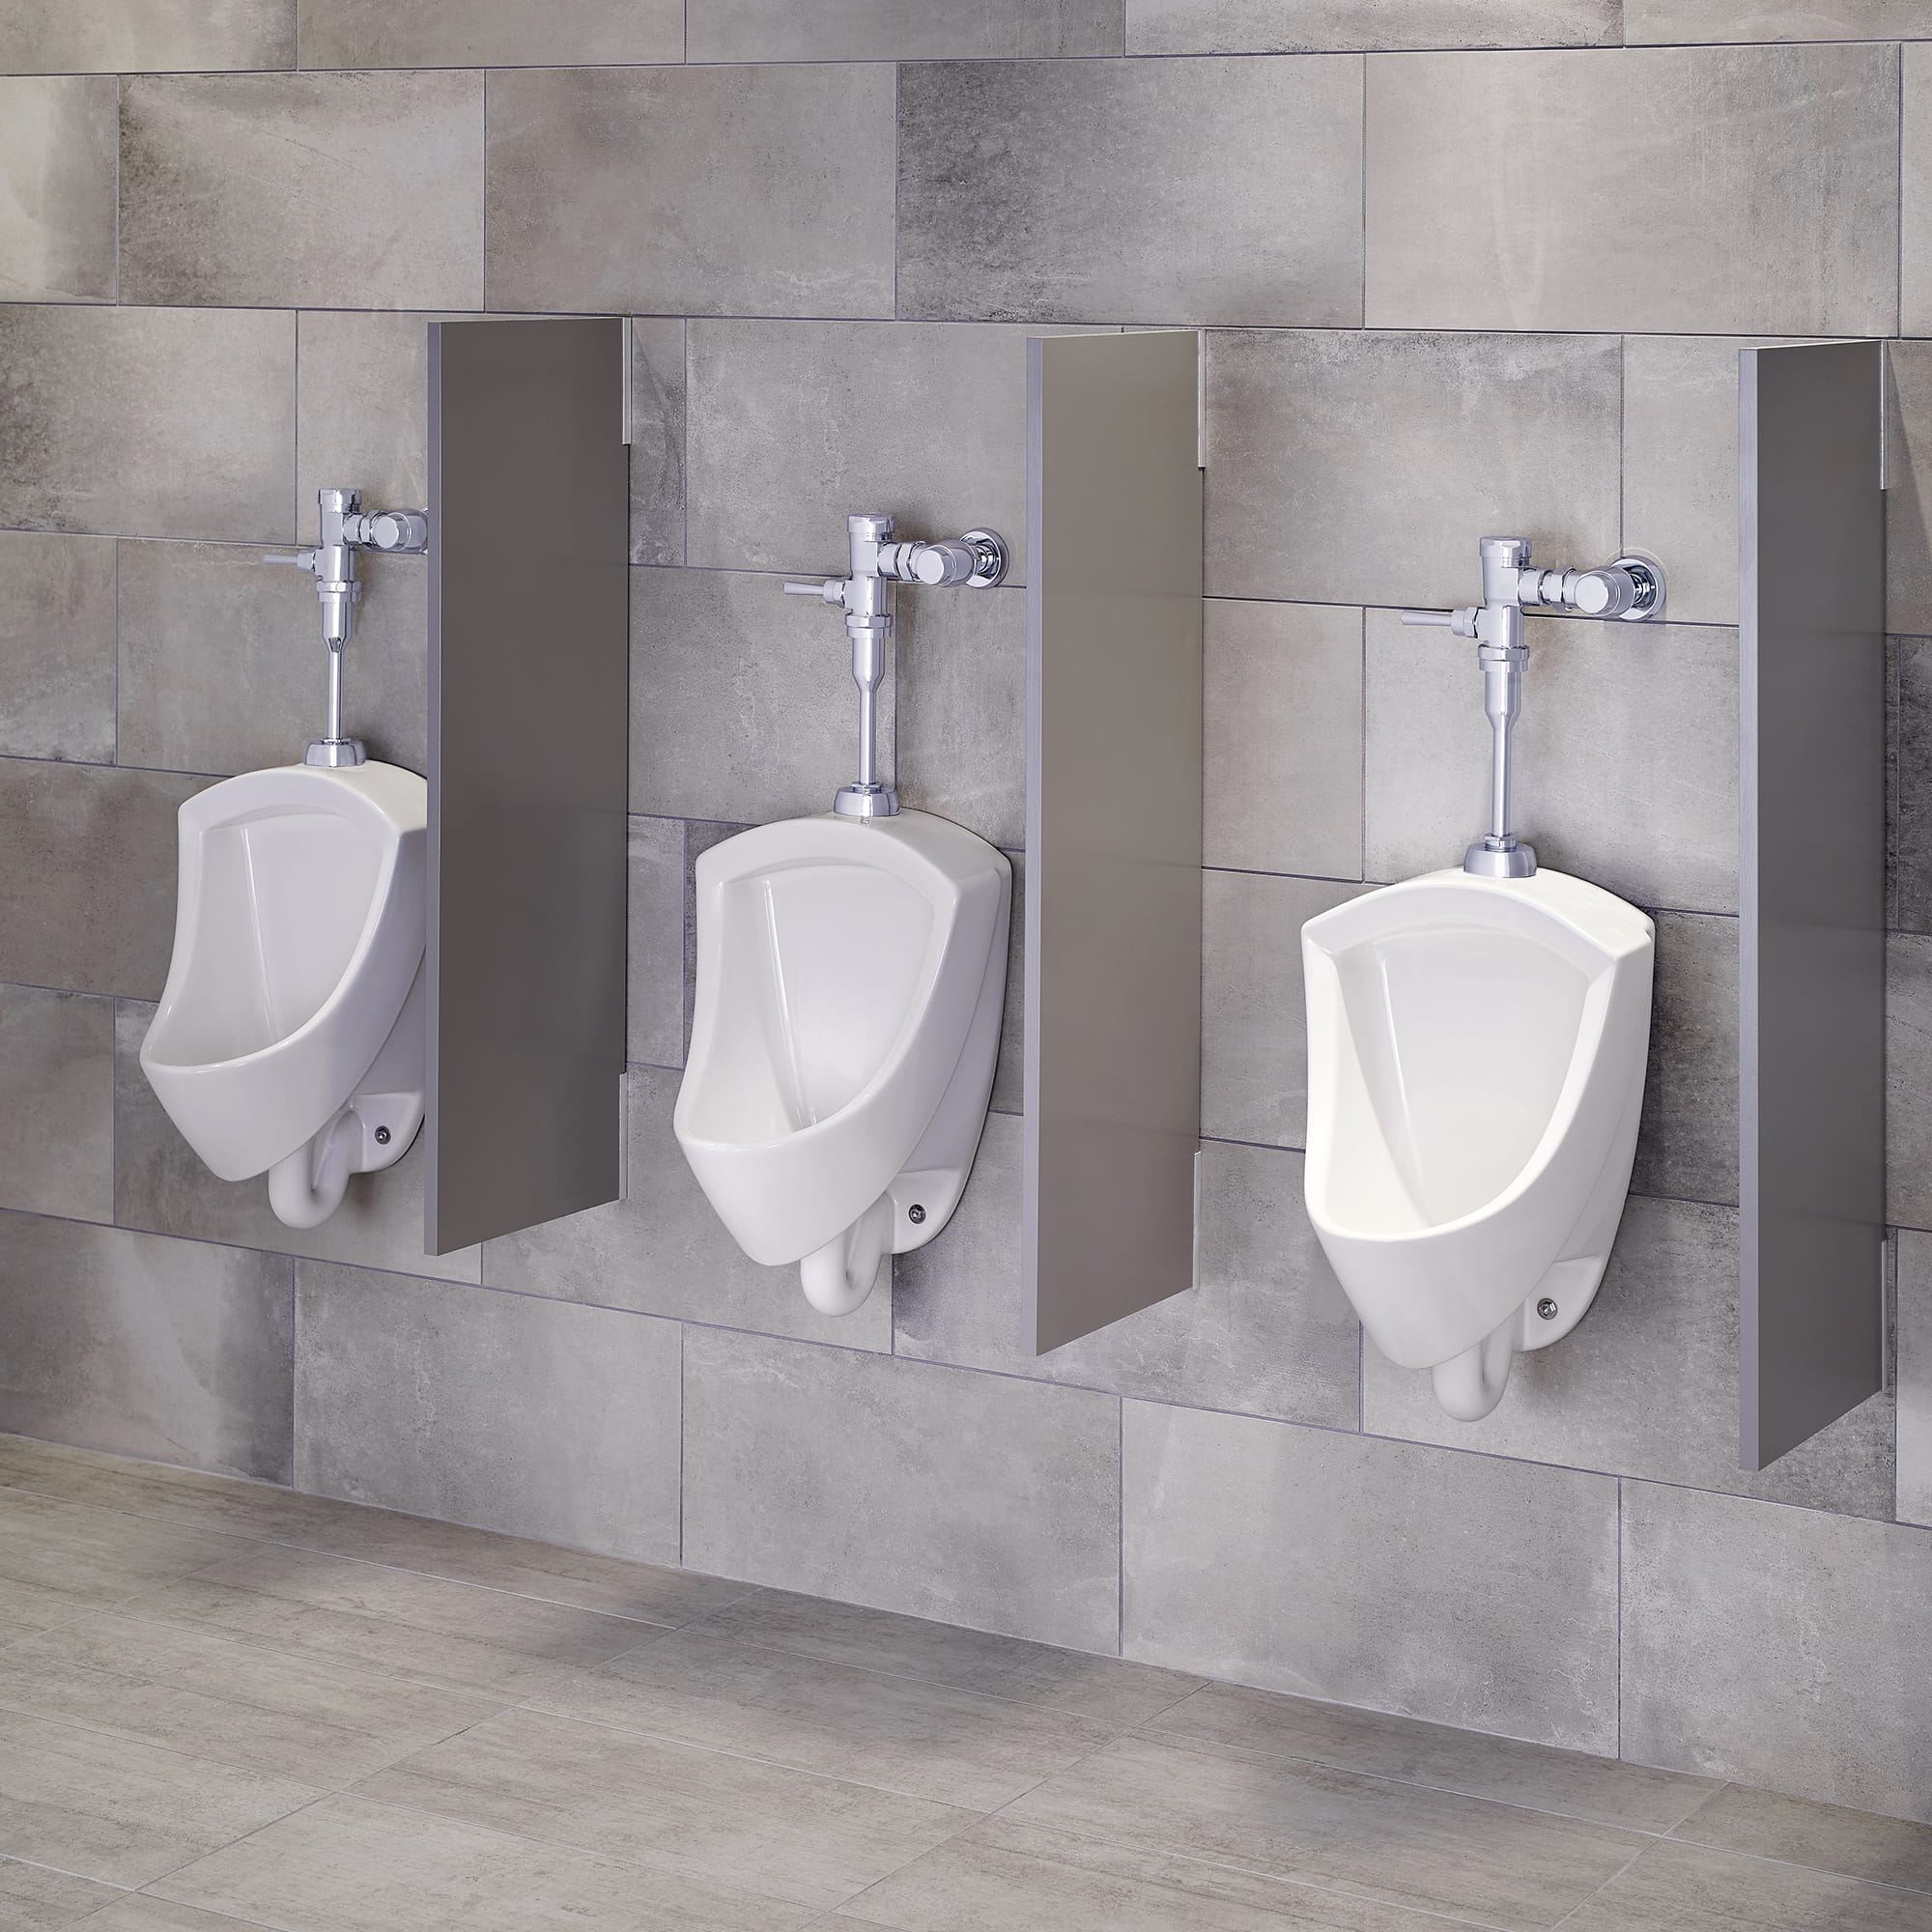 NIB American Standard 6045013.002 0.125 Gpf Urinal Flush Valve